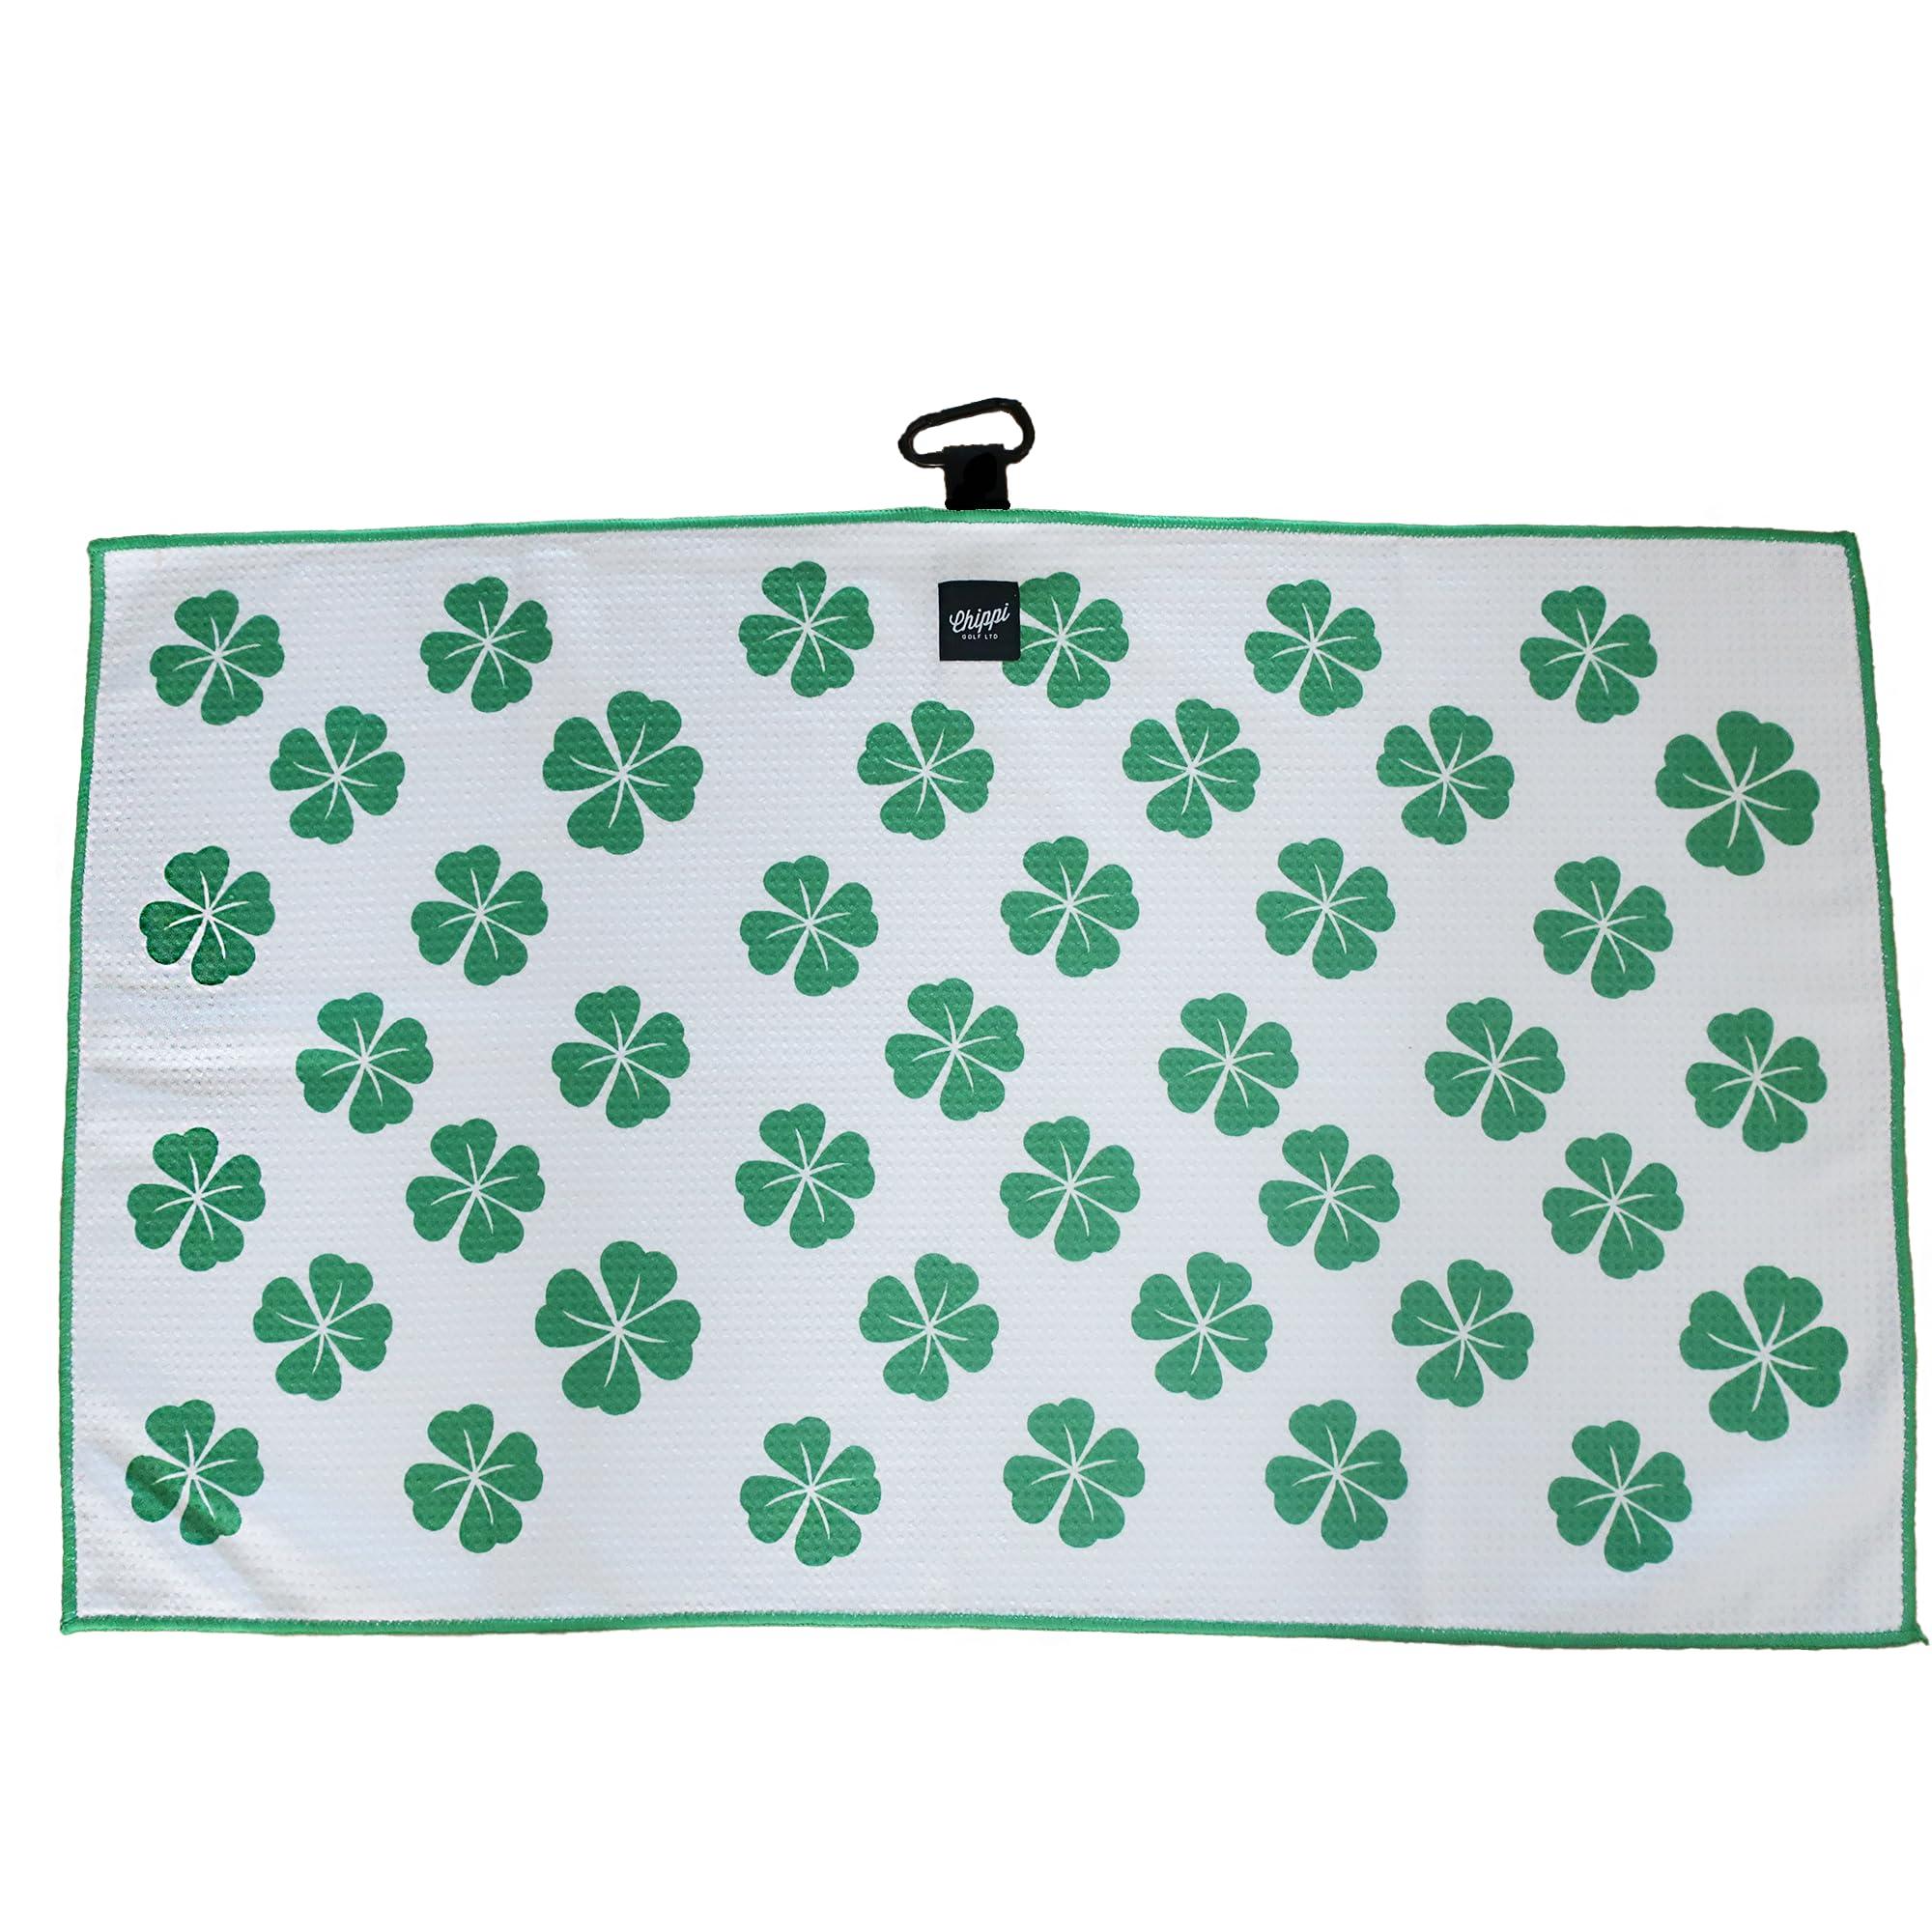 Chippi Golf Golf Towel (Luck of the Irish Green), Microfiber Fabric Waffle Pattern Golf Towel, Heavy Duty Clip